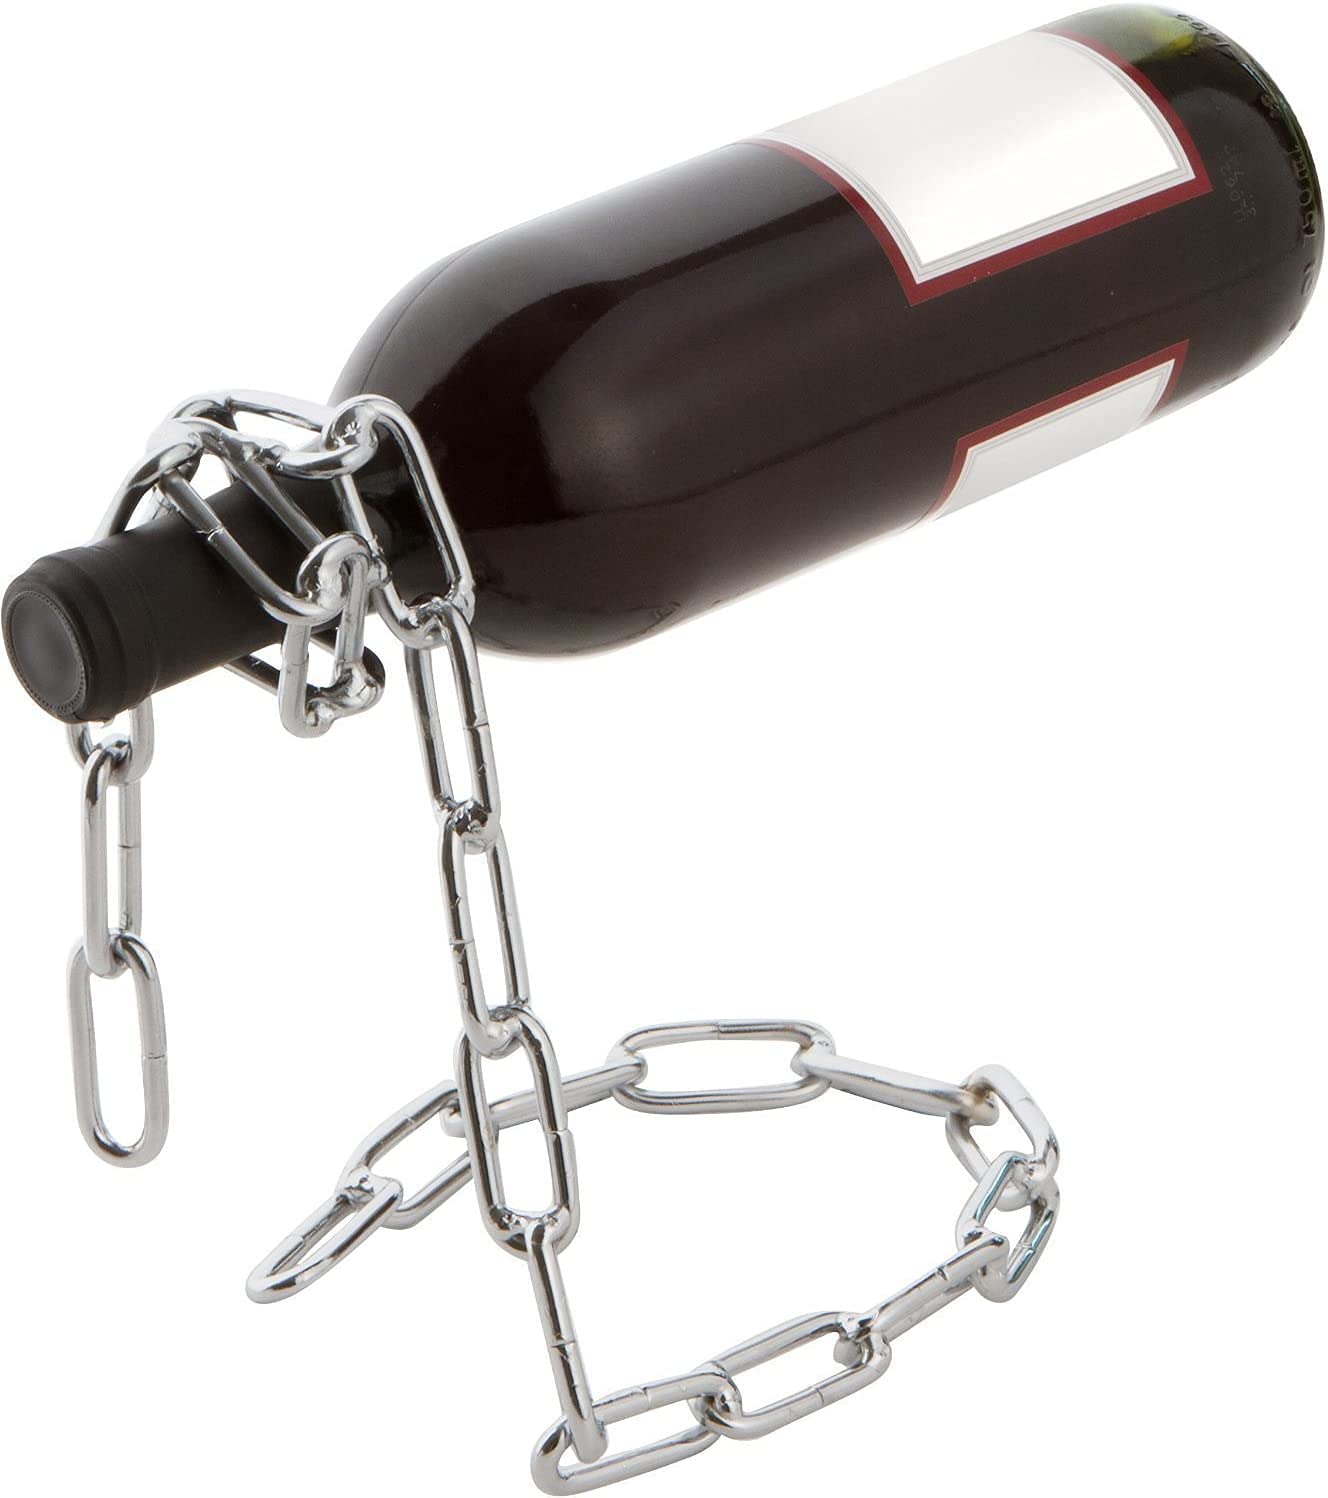 SkyShopy Suspending Chain Wine Rack Holder, Countertop Free Standing Metal Wine Rack Novelty for Gift Kitchen Home Decoration Modern Design Wine Gifts Tabletop Wine Bottle Holder